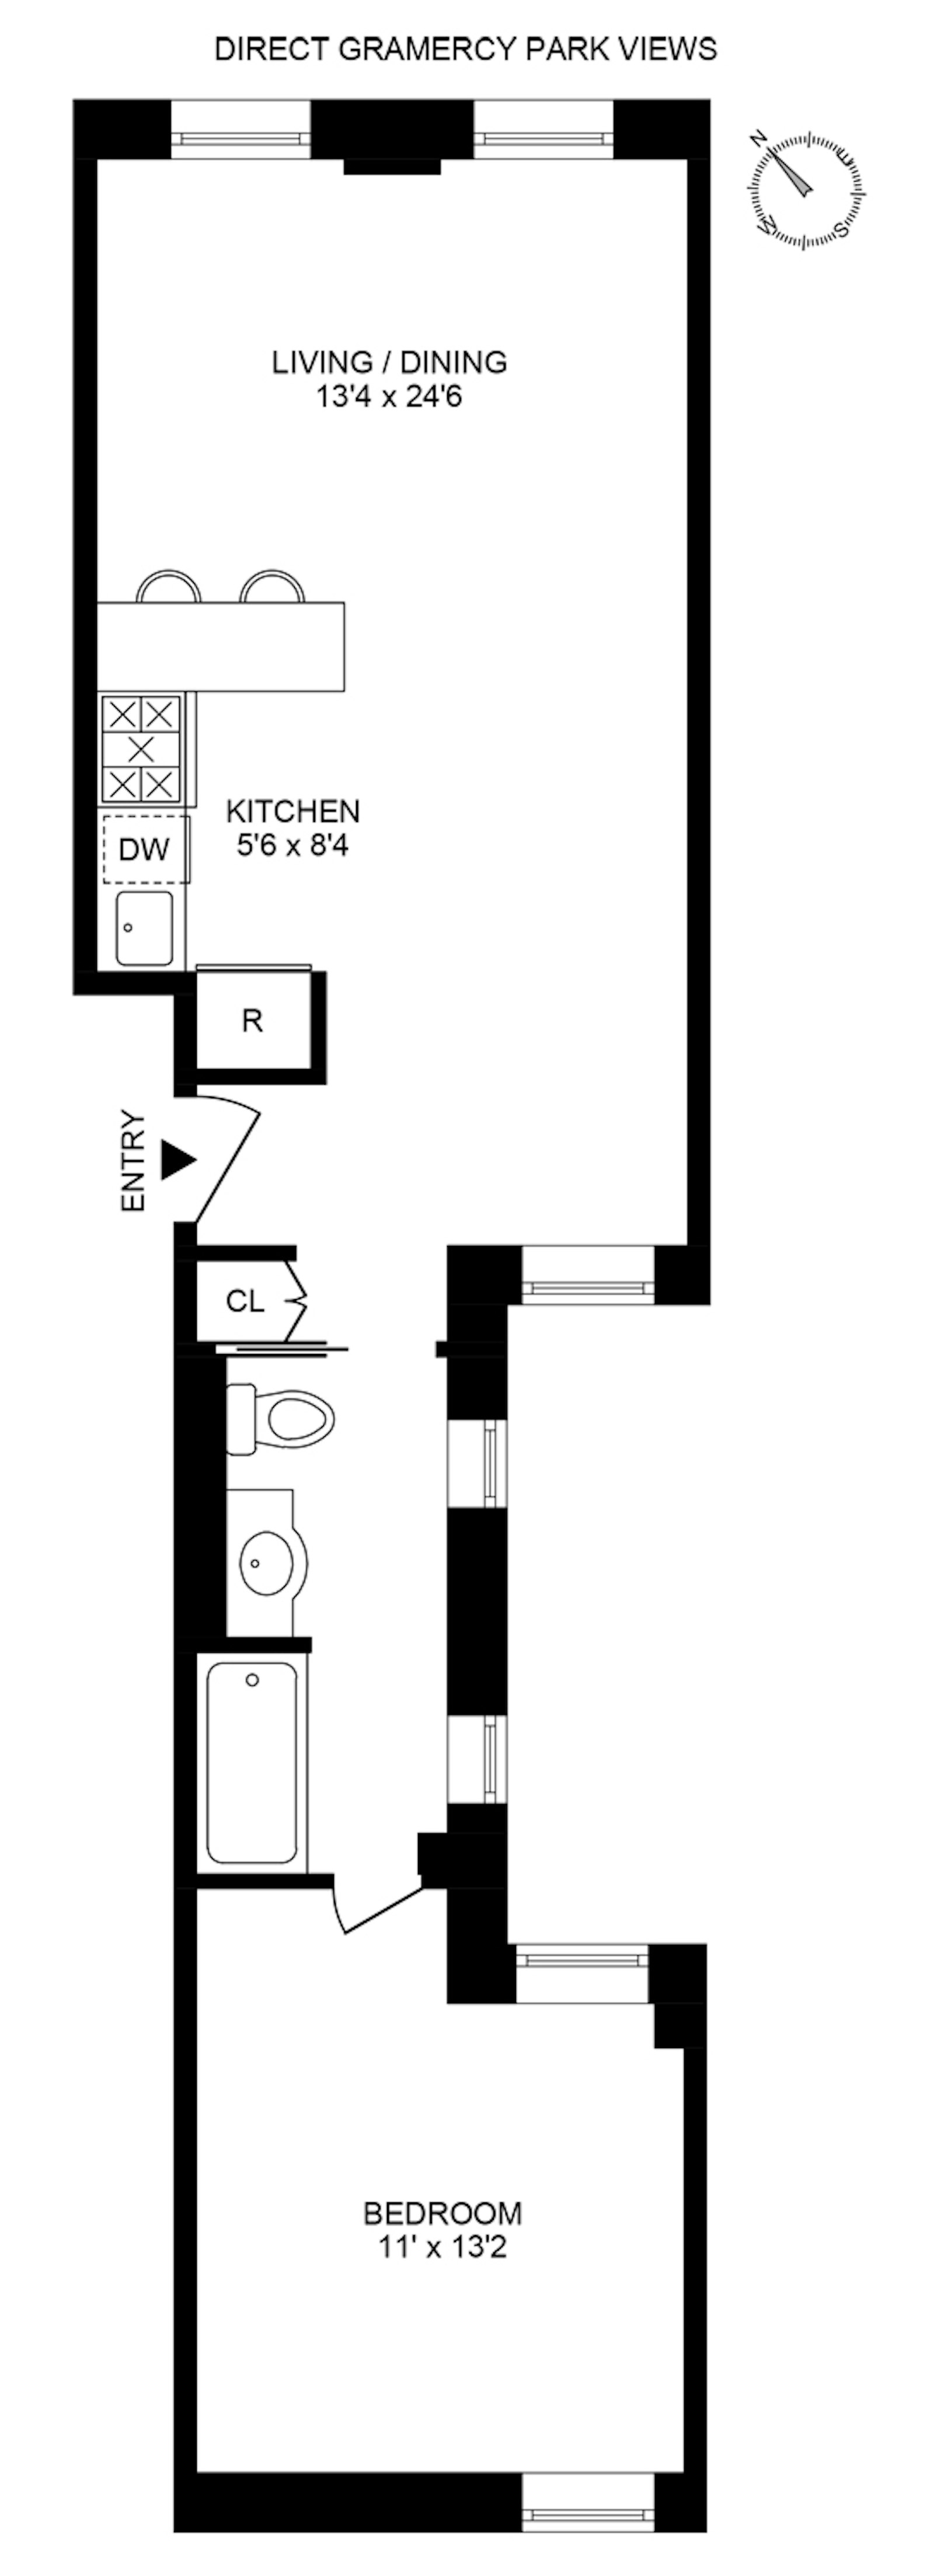 Floorplan for 26 Gramercy Park, 4A